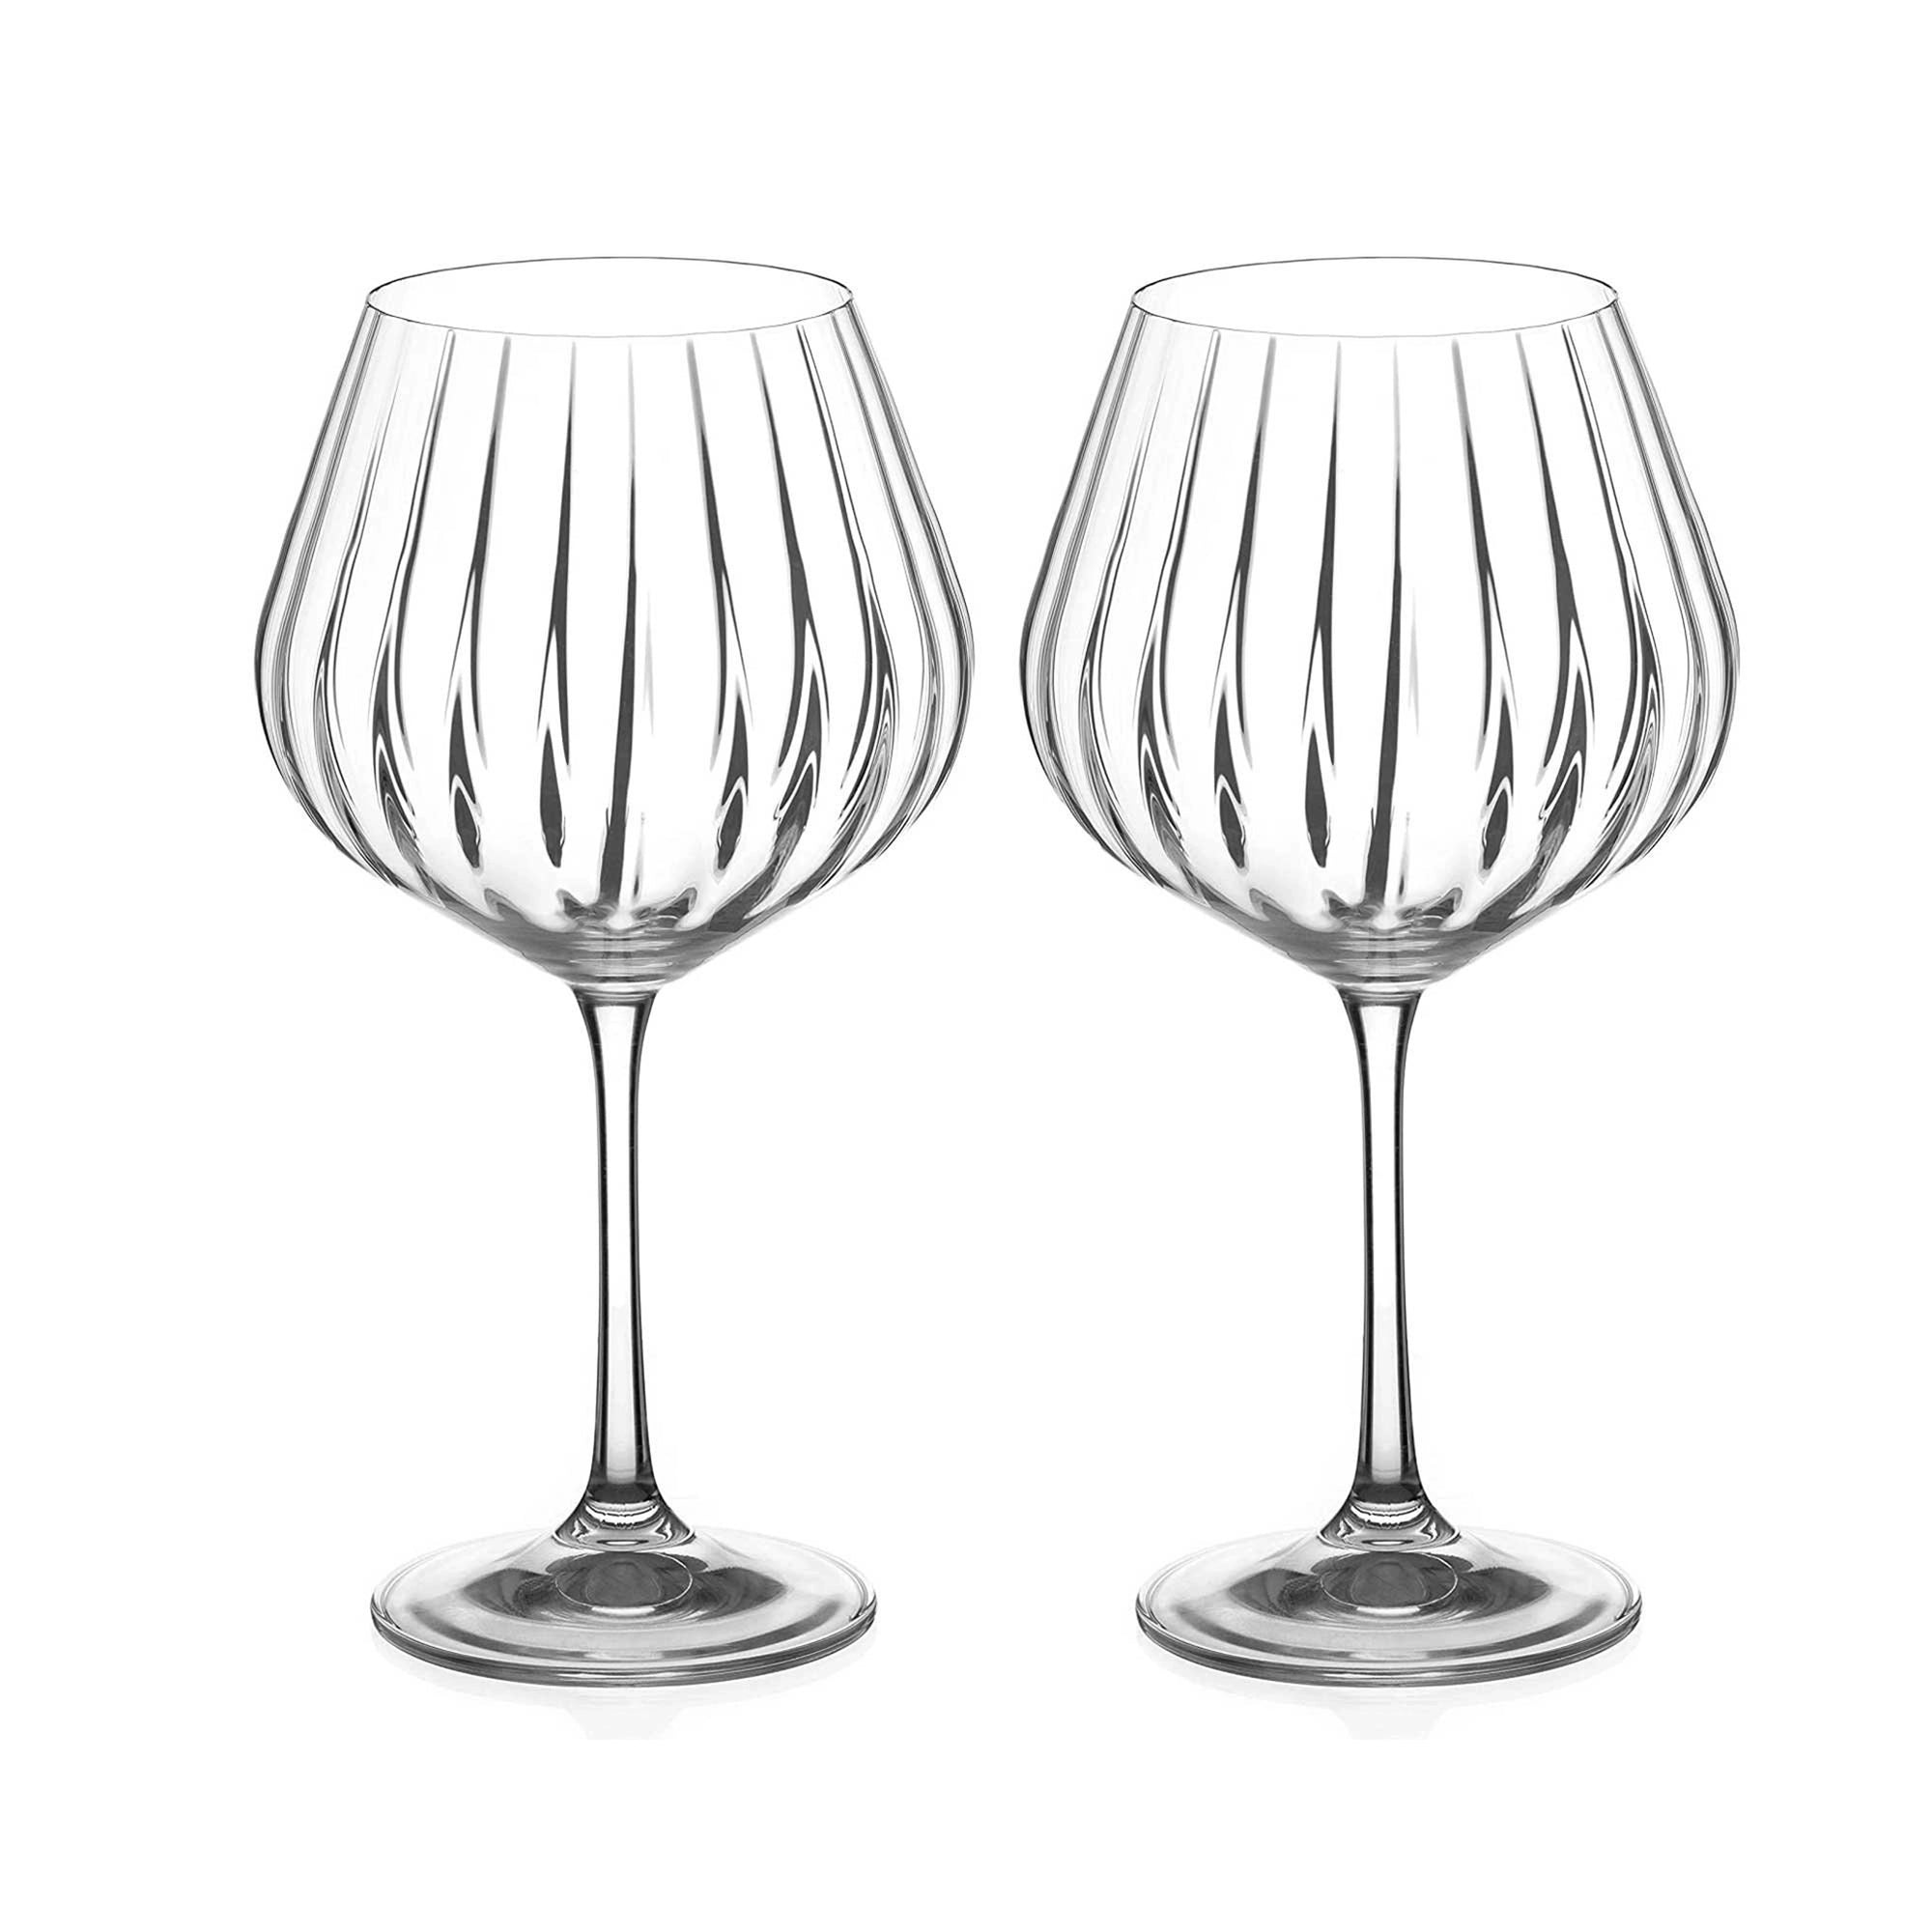 Mirage wine glass